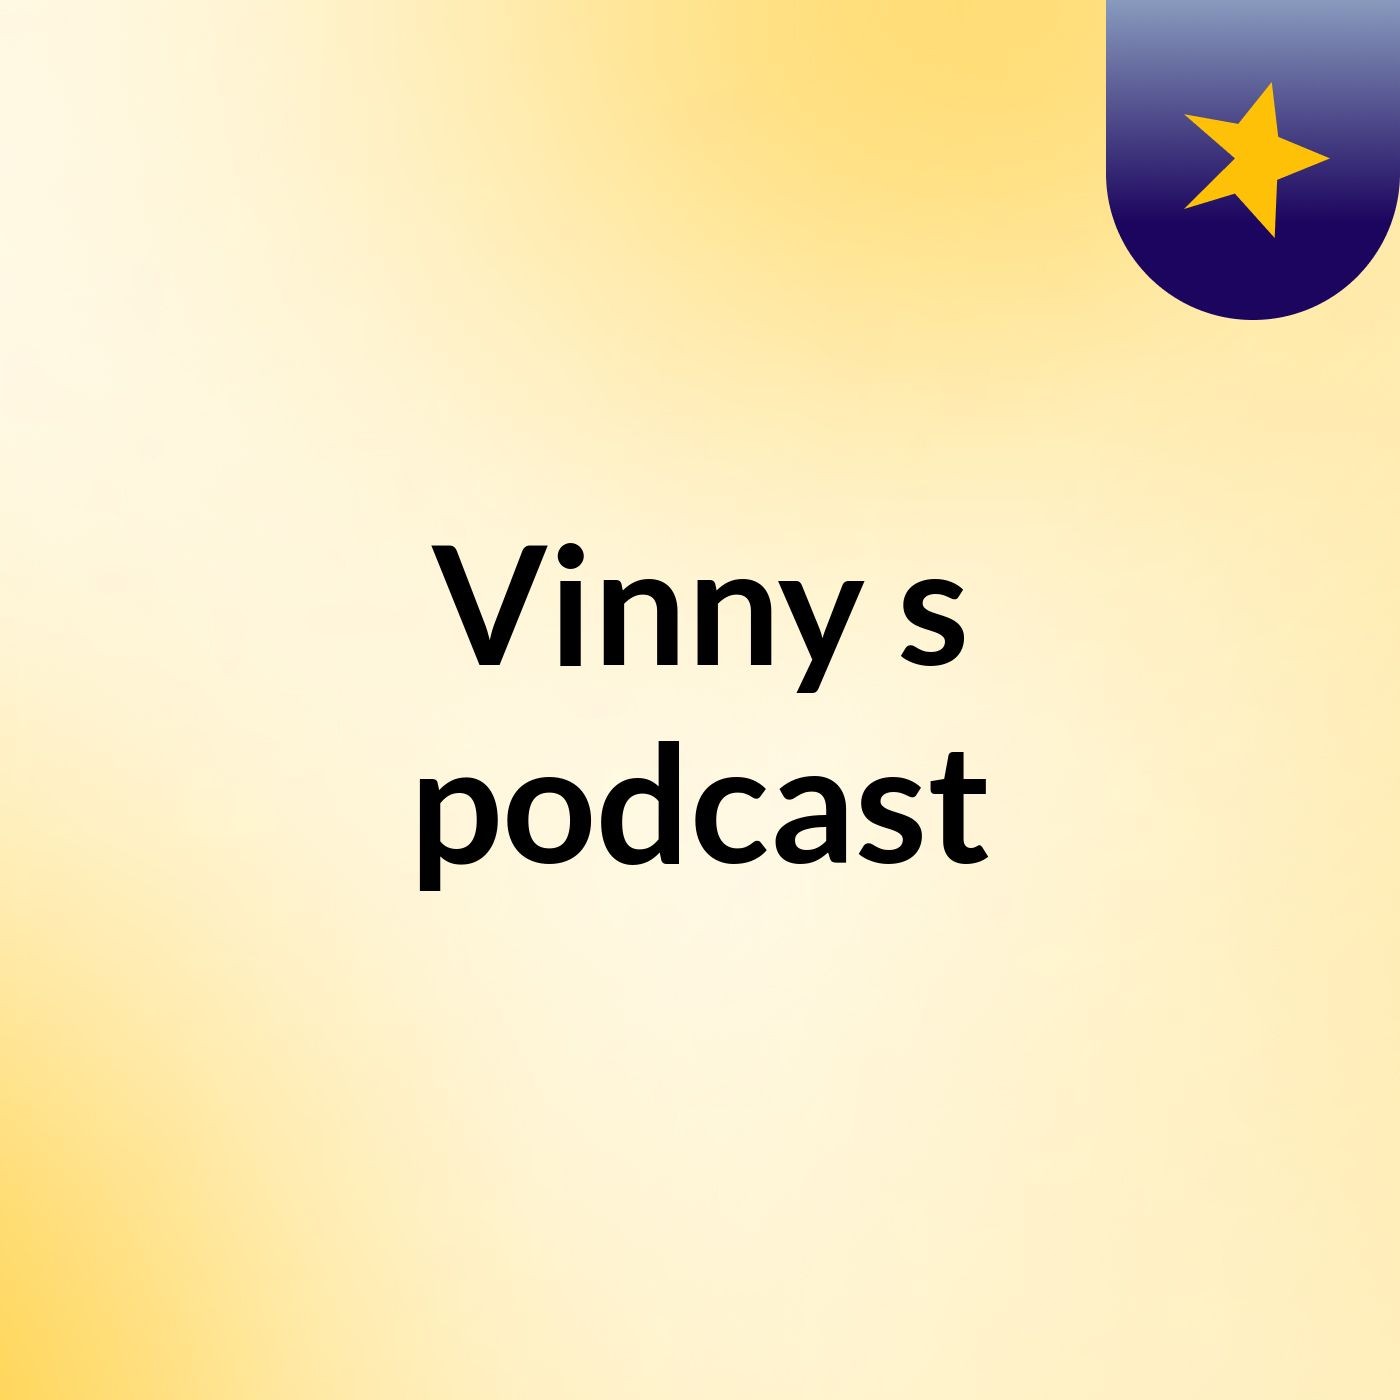 Vinny's podcast